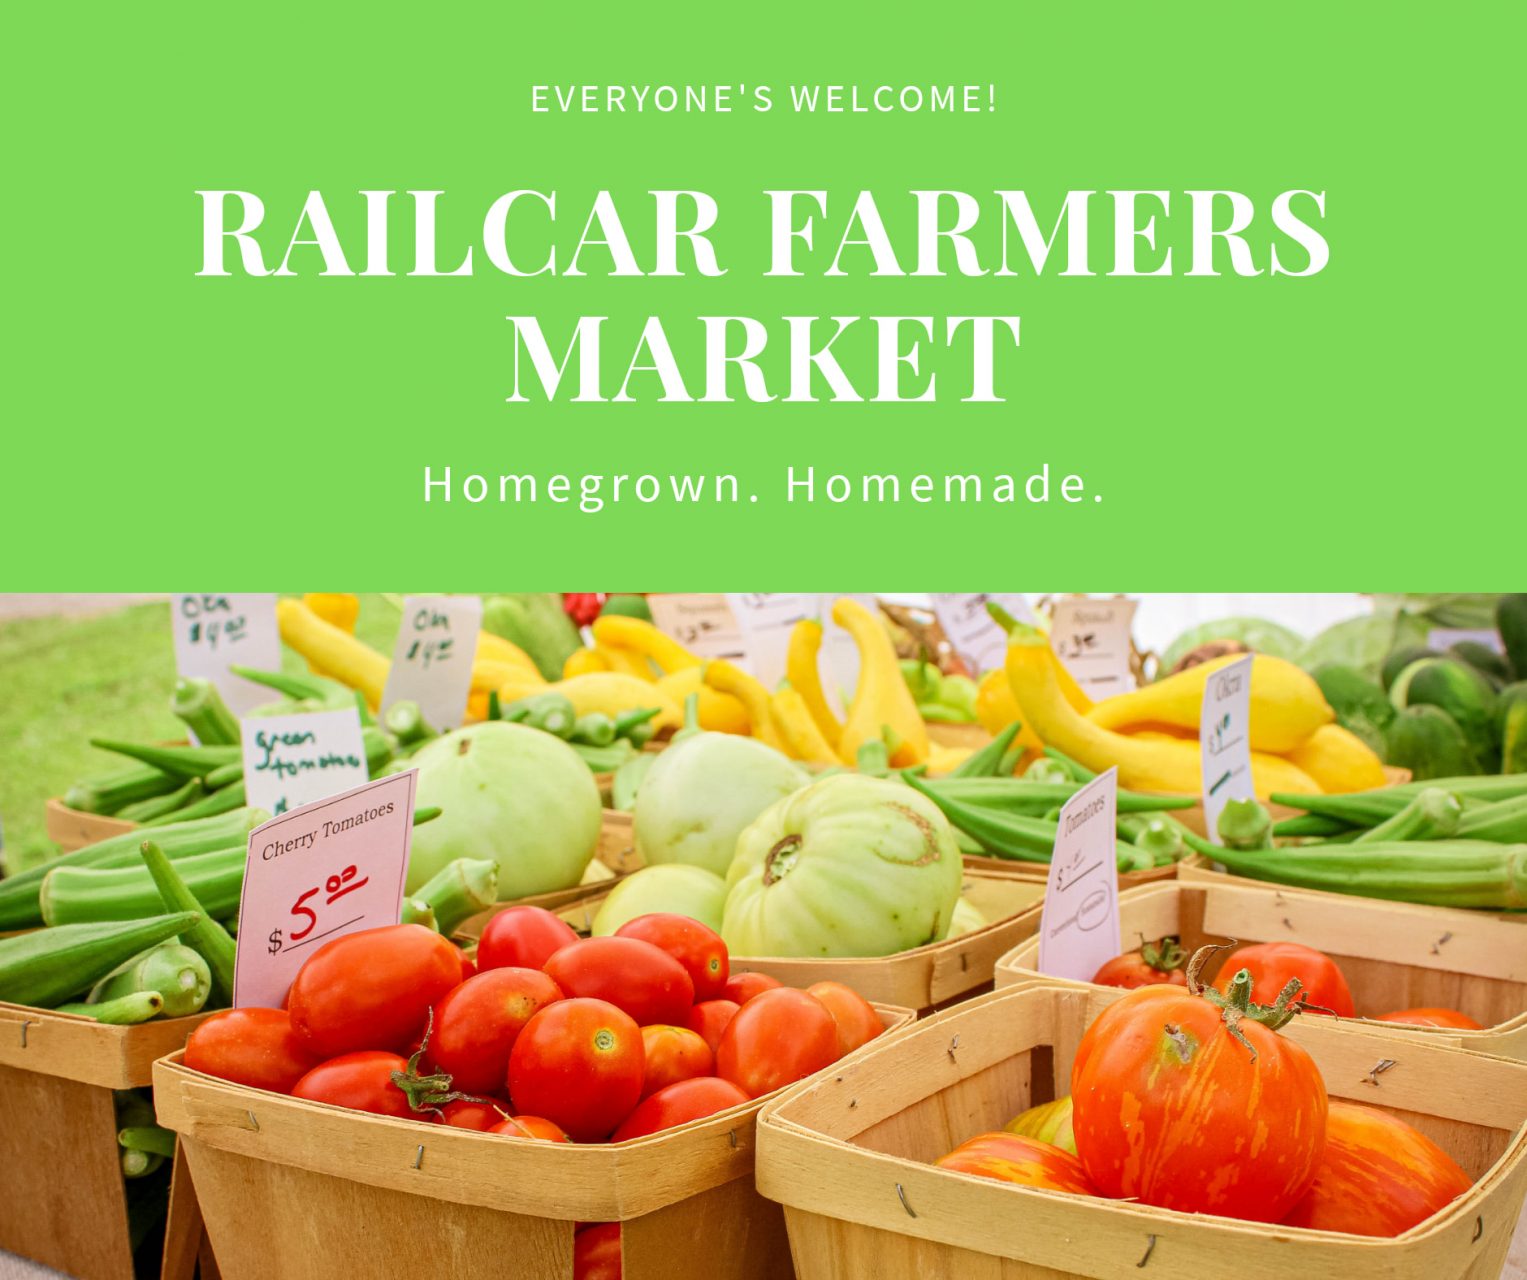 Railcar Farmers Market of Van Alstyne